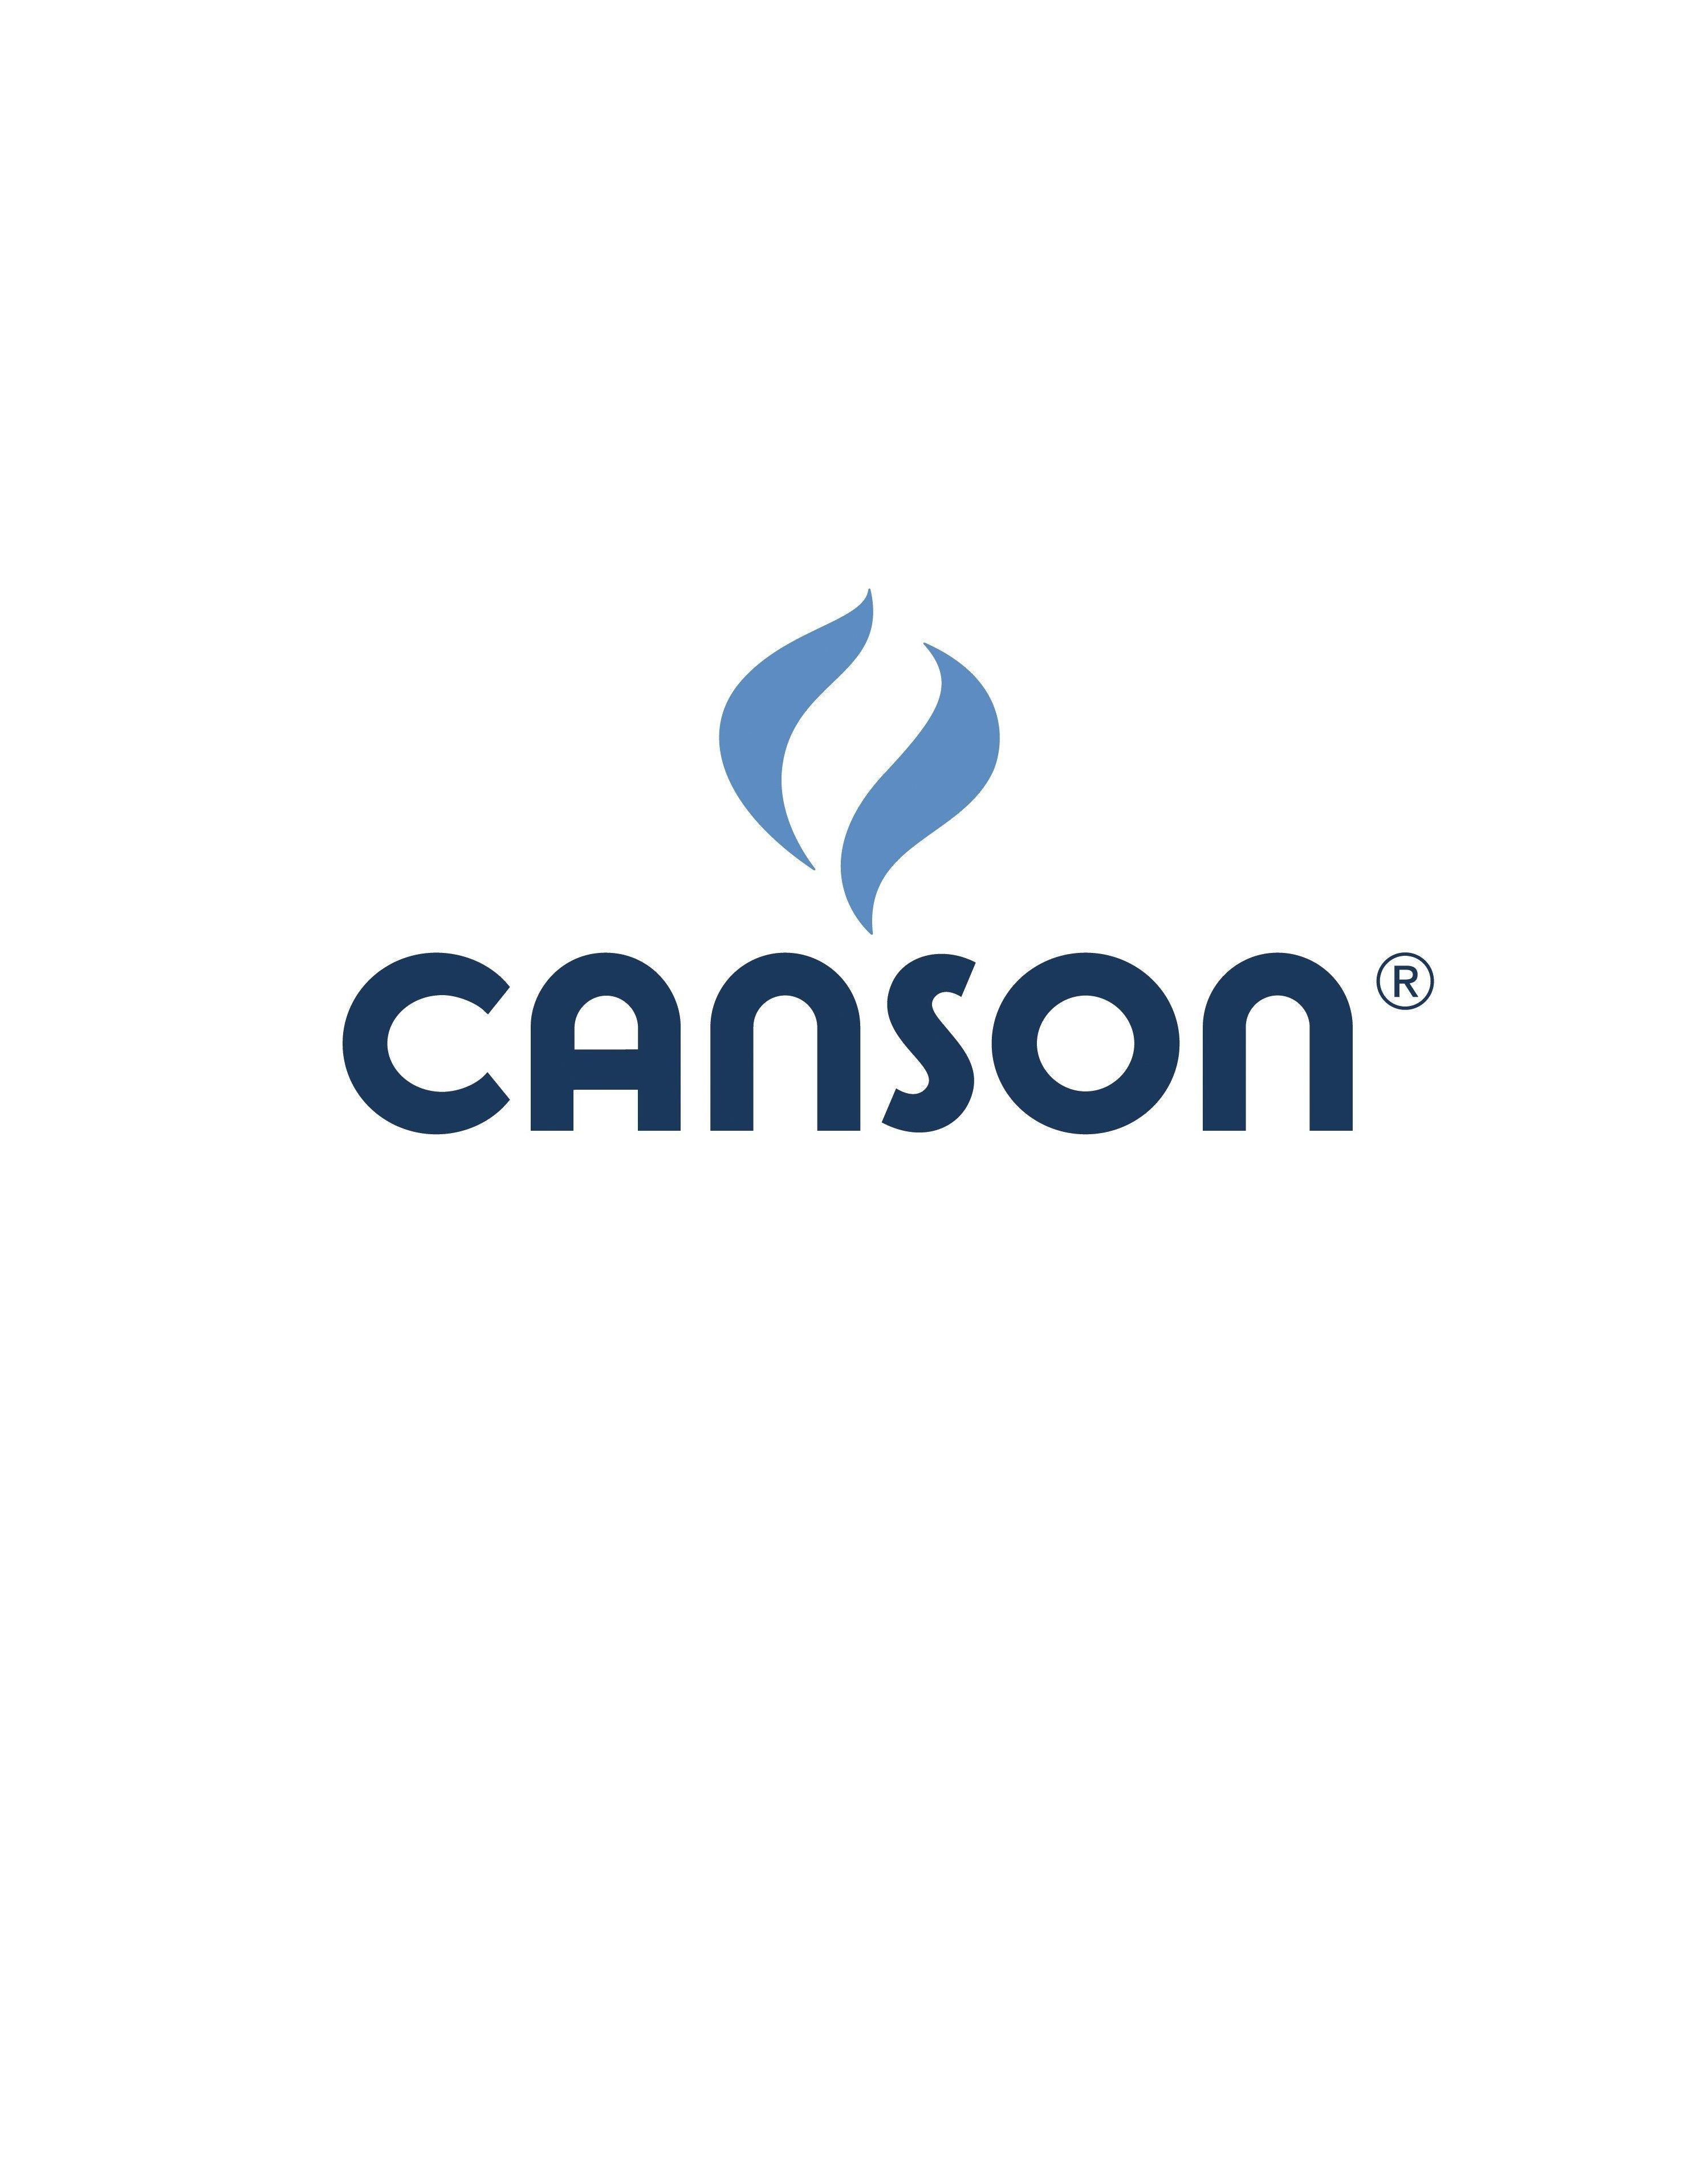 Canson Logo - CANSON' logo. CANSON ®. Sketches, Urban sketching y